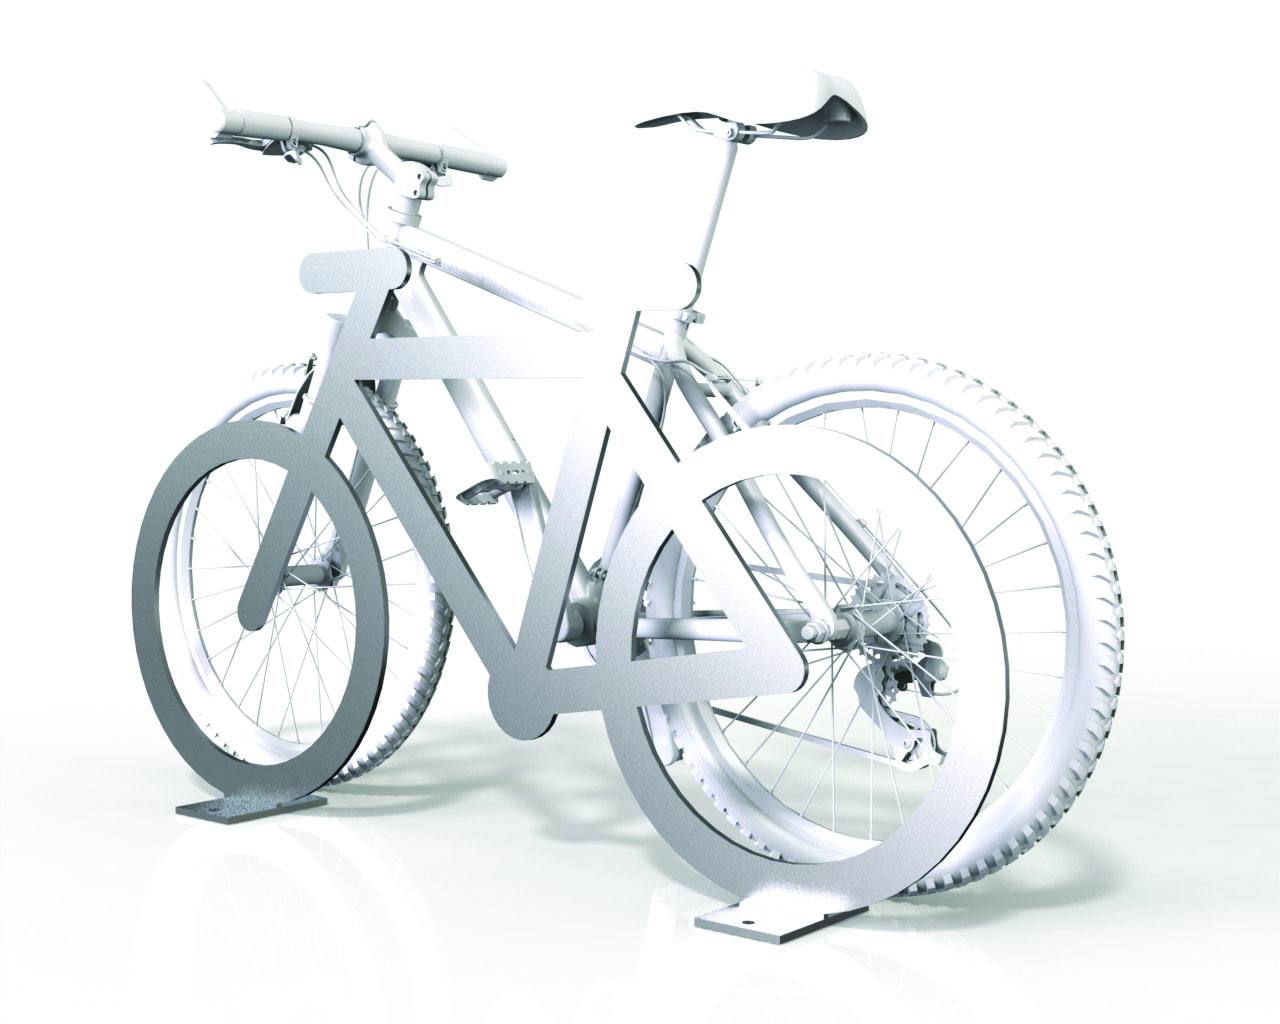 Riel para 2 bicicletas con forma de bicicleta